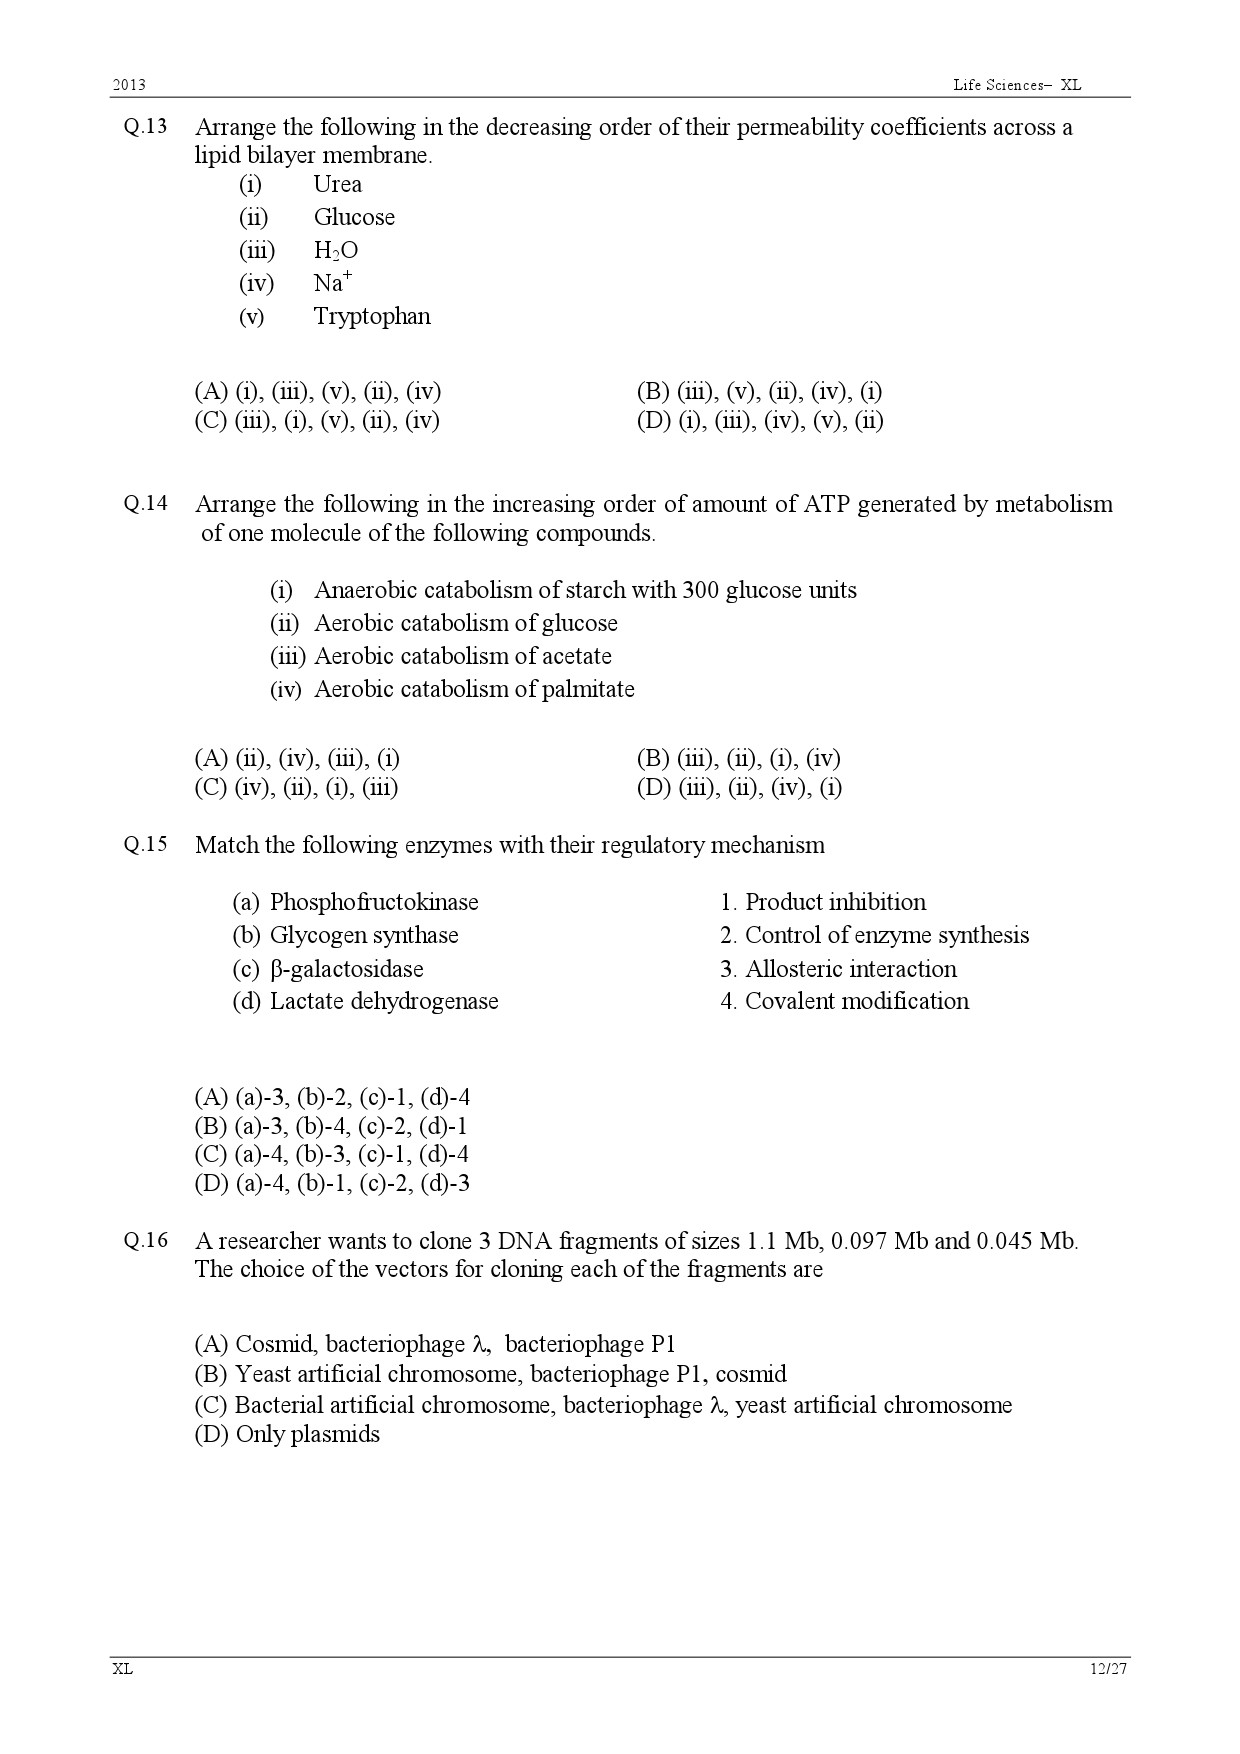 GATE Exam Question Paper 2013 Life Sciences 12